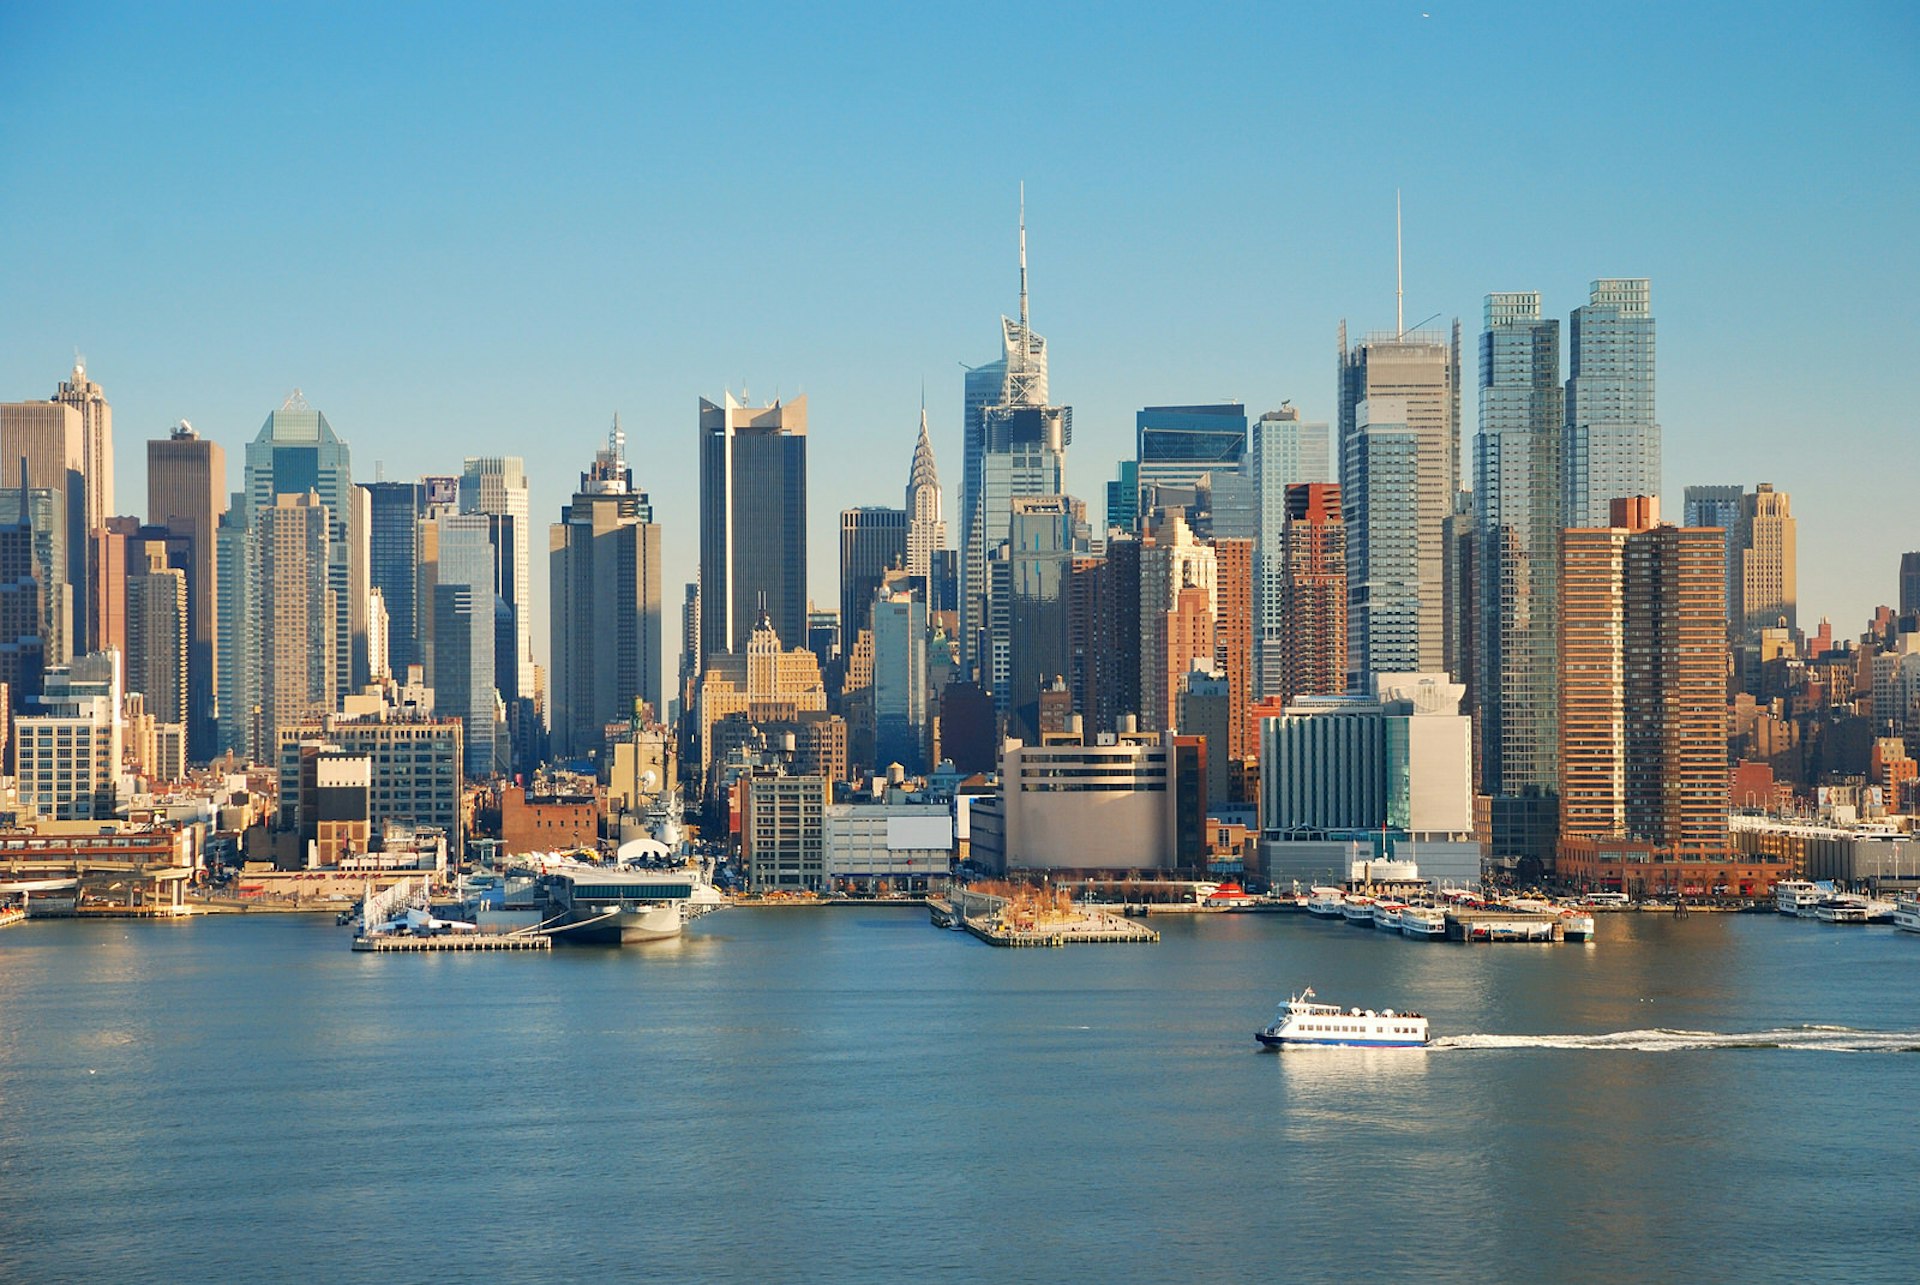 Manhattan's skyline seen from across the Hudson River, New York City, USA